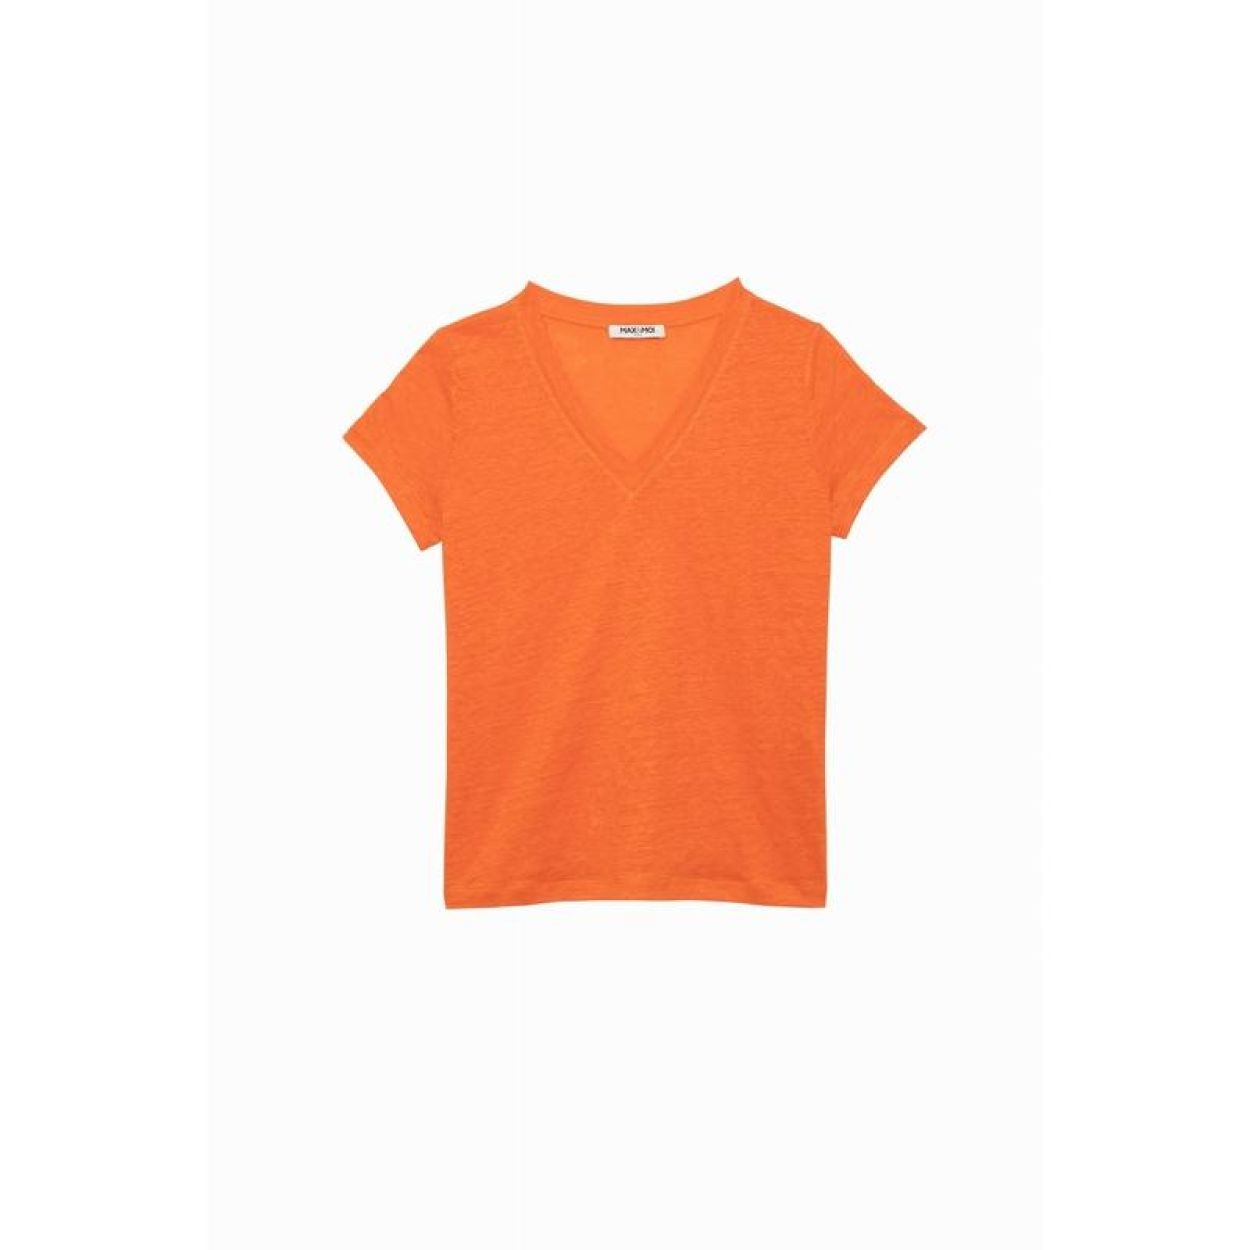 Max & Moi Kleed Oranje  (Tokyo/Sanguine) - Corylie (Roeselare)